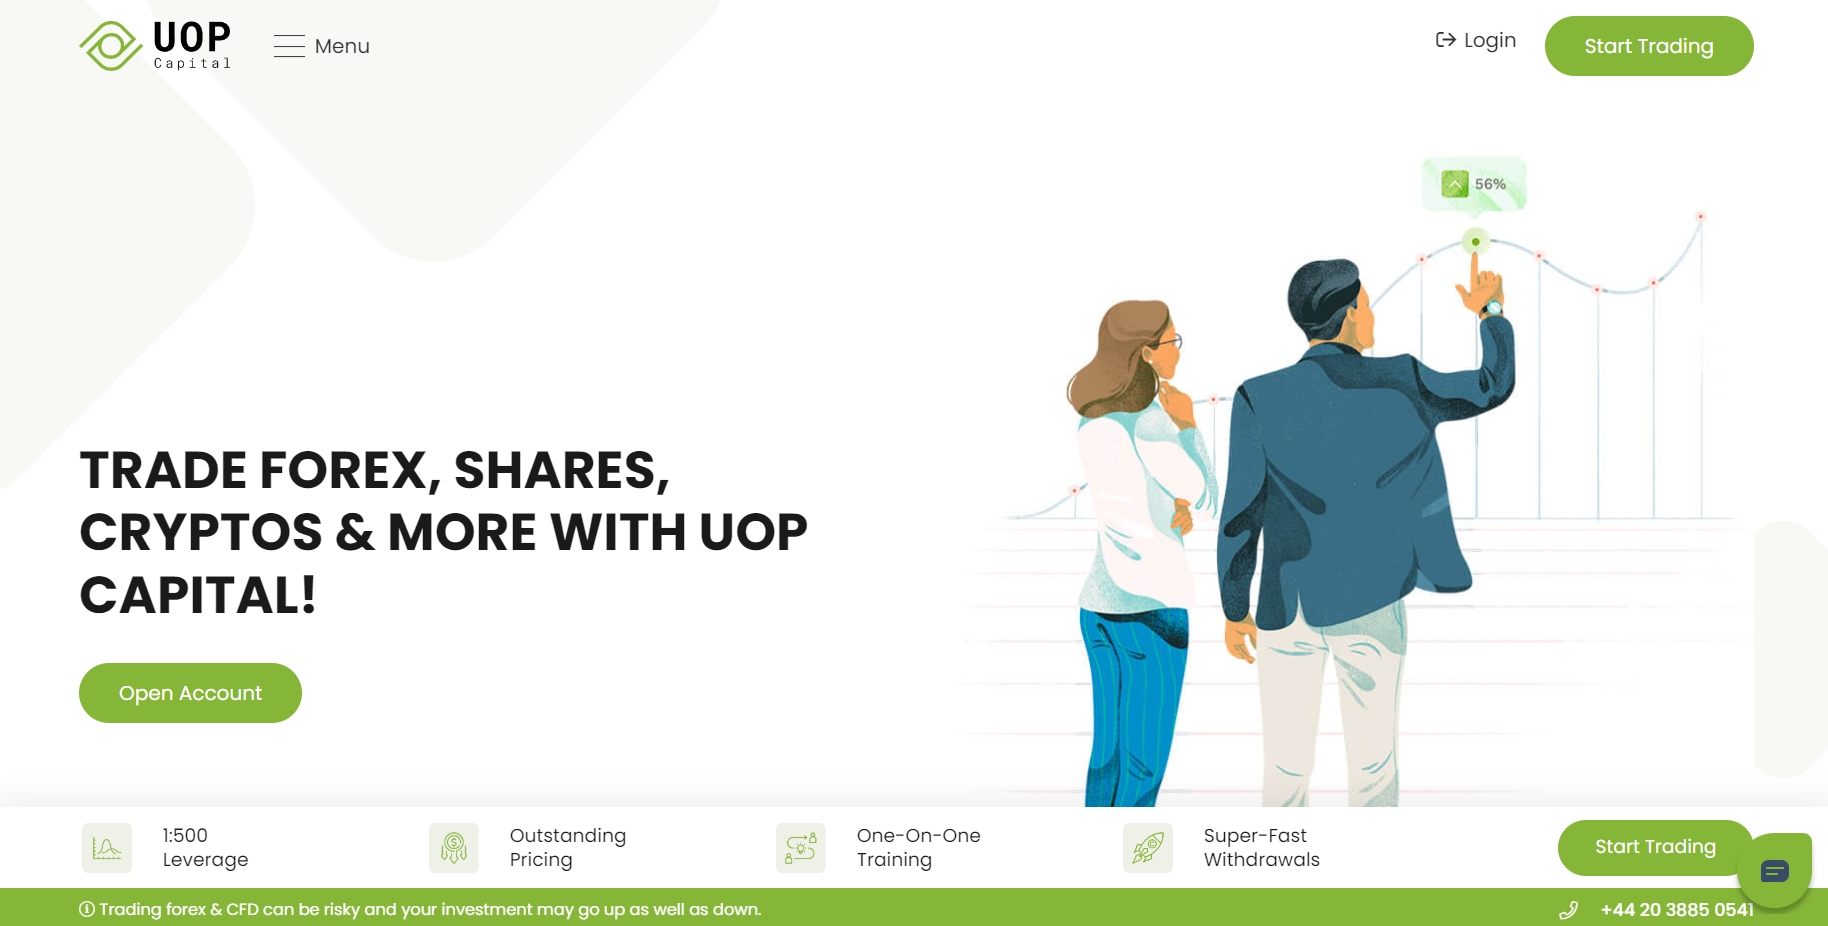 UOP Capital homepage